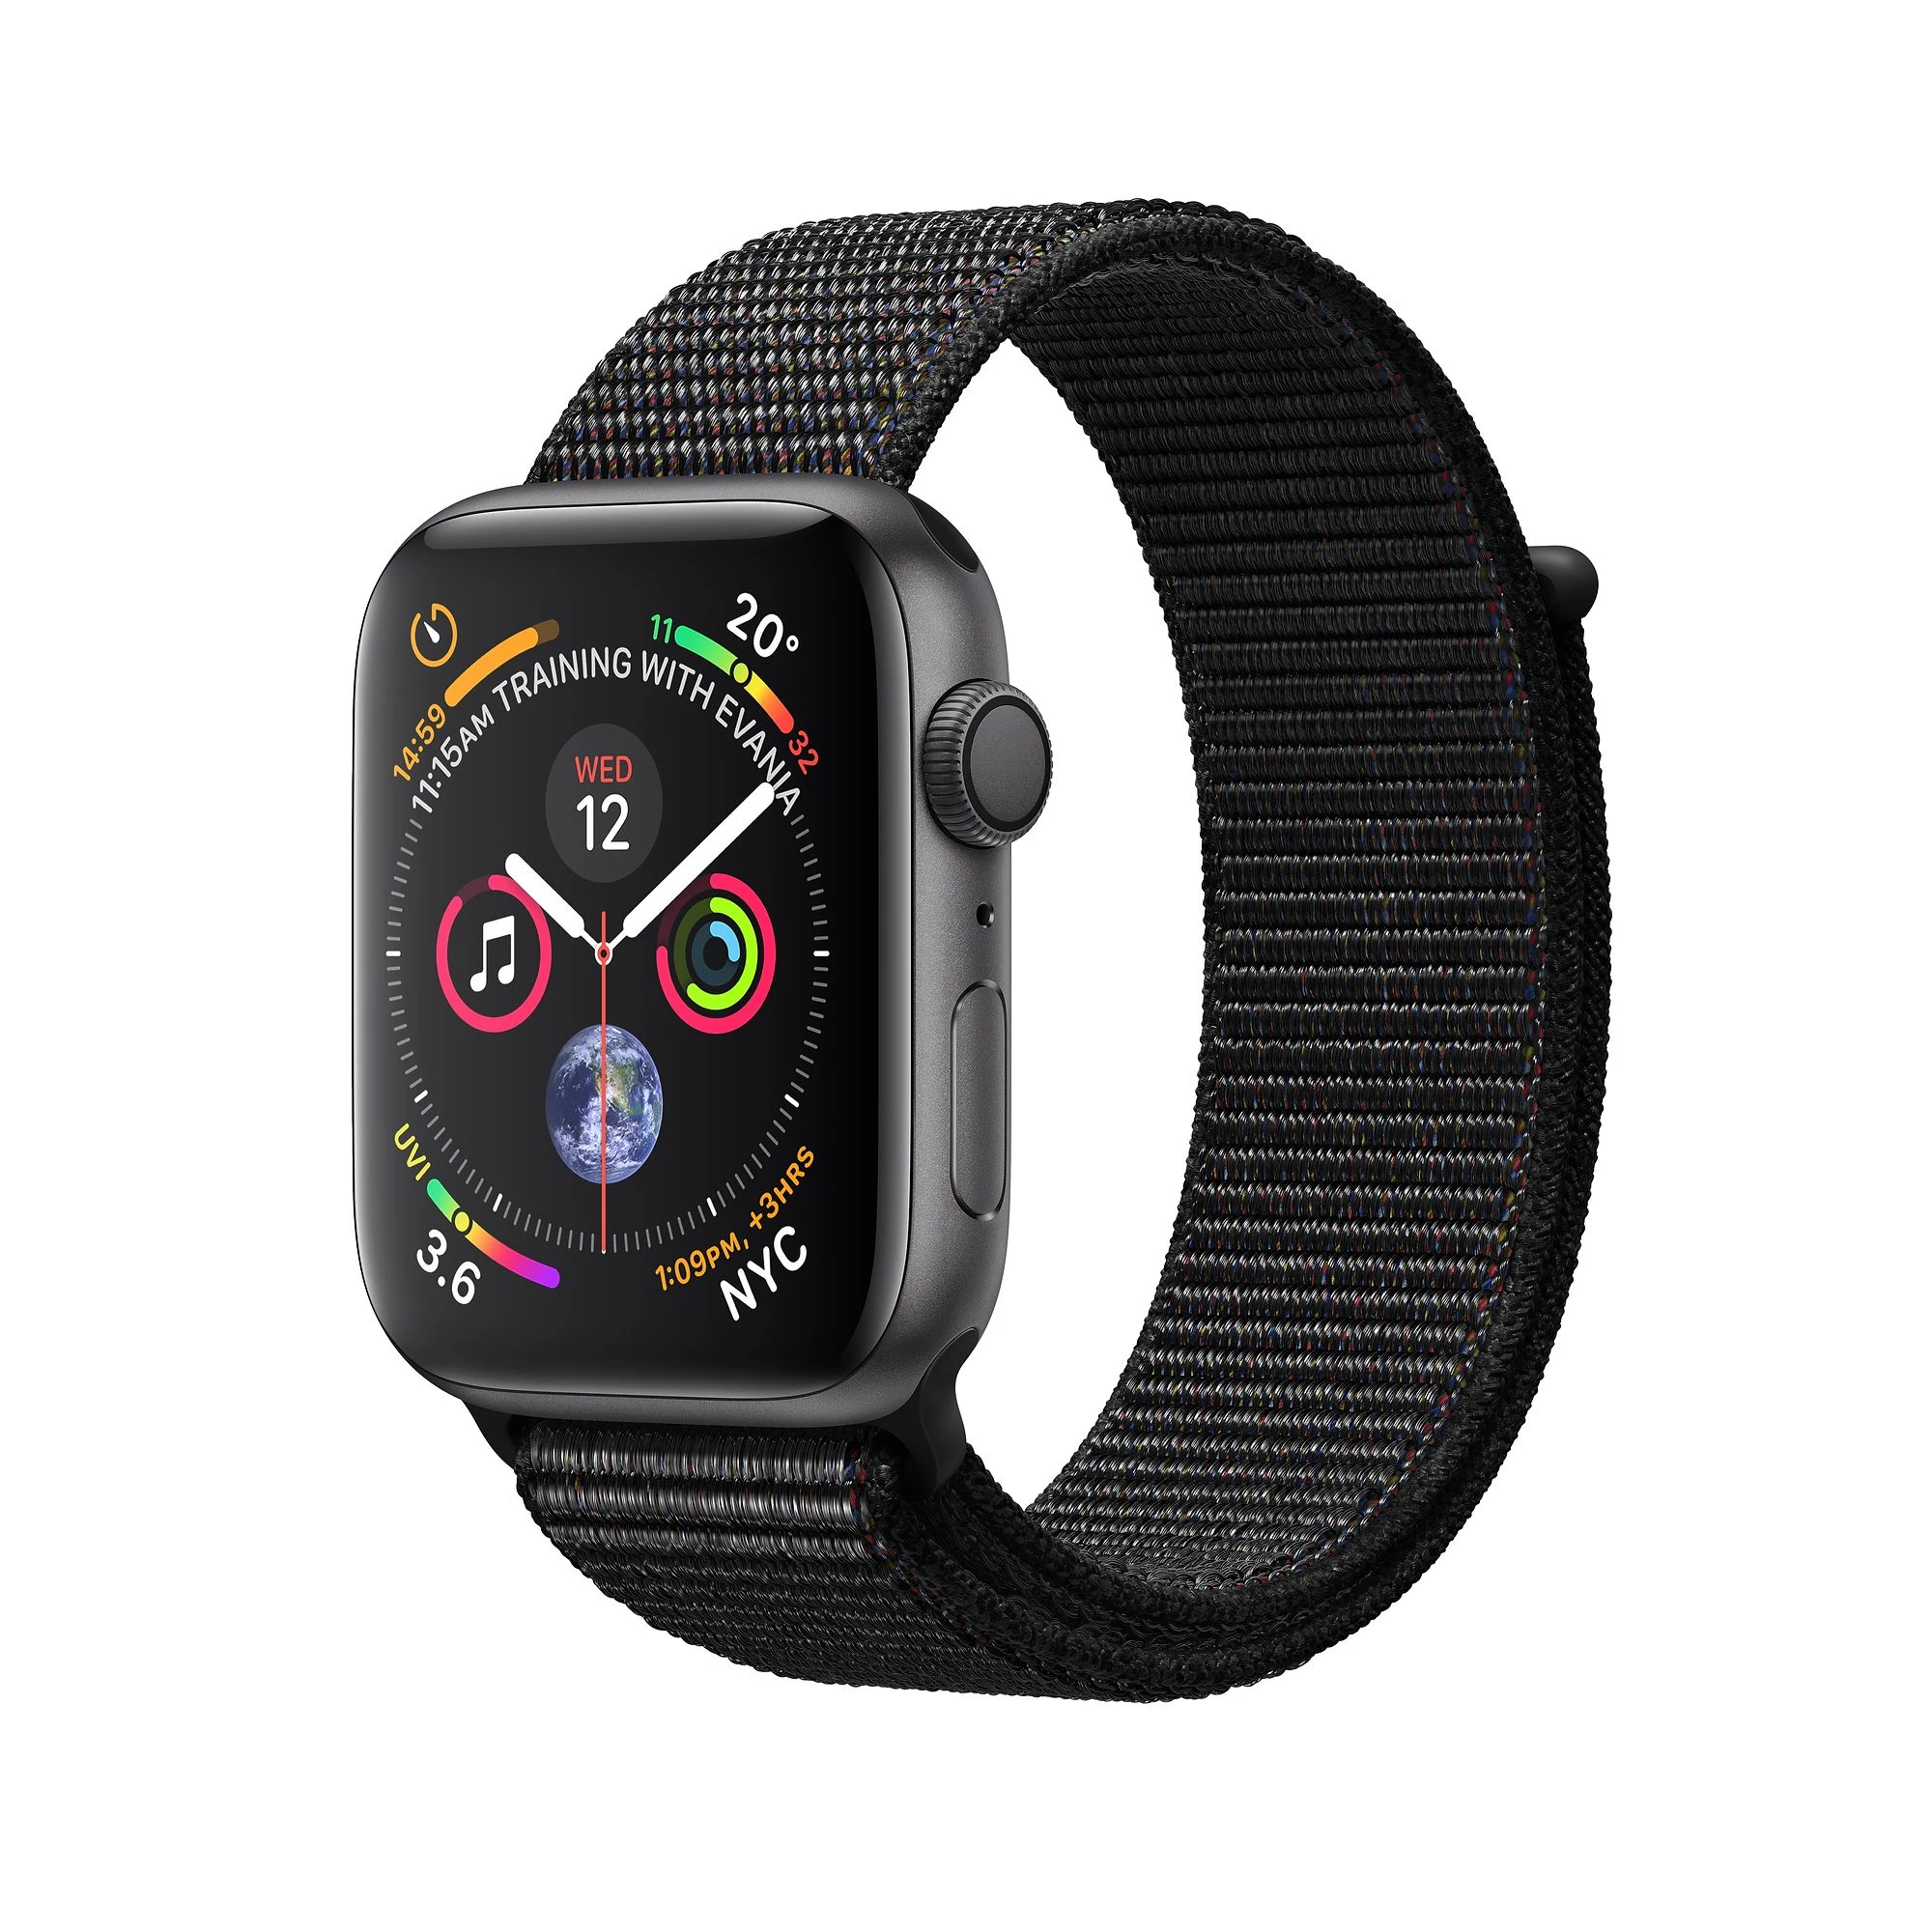 Apple Watch Series 4 (GPS) 40mm Space Gray Aluminium Case with Black Sport Loop (MU672)